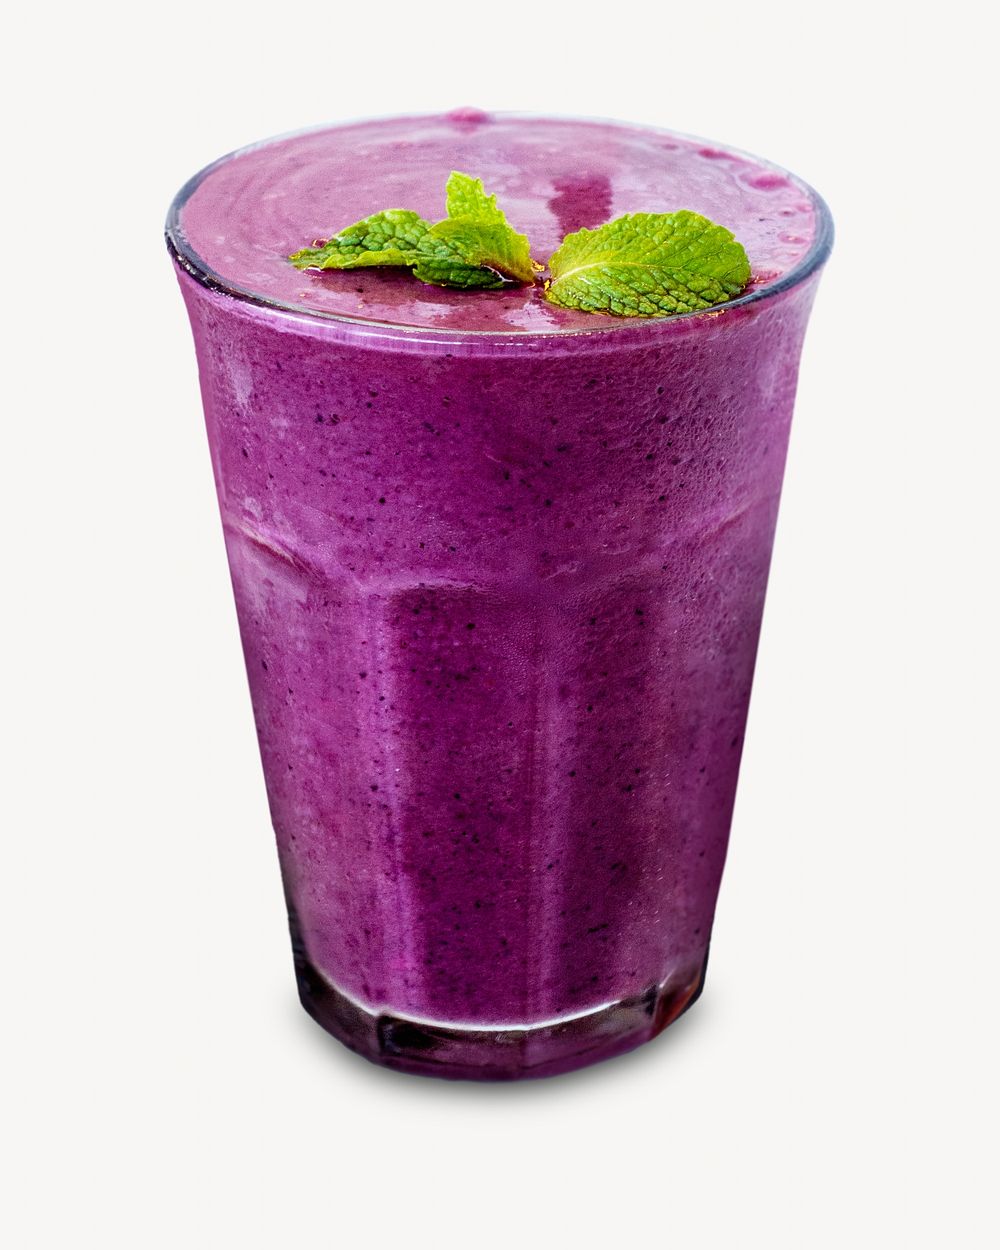 Purple smoothie image on white